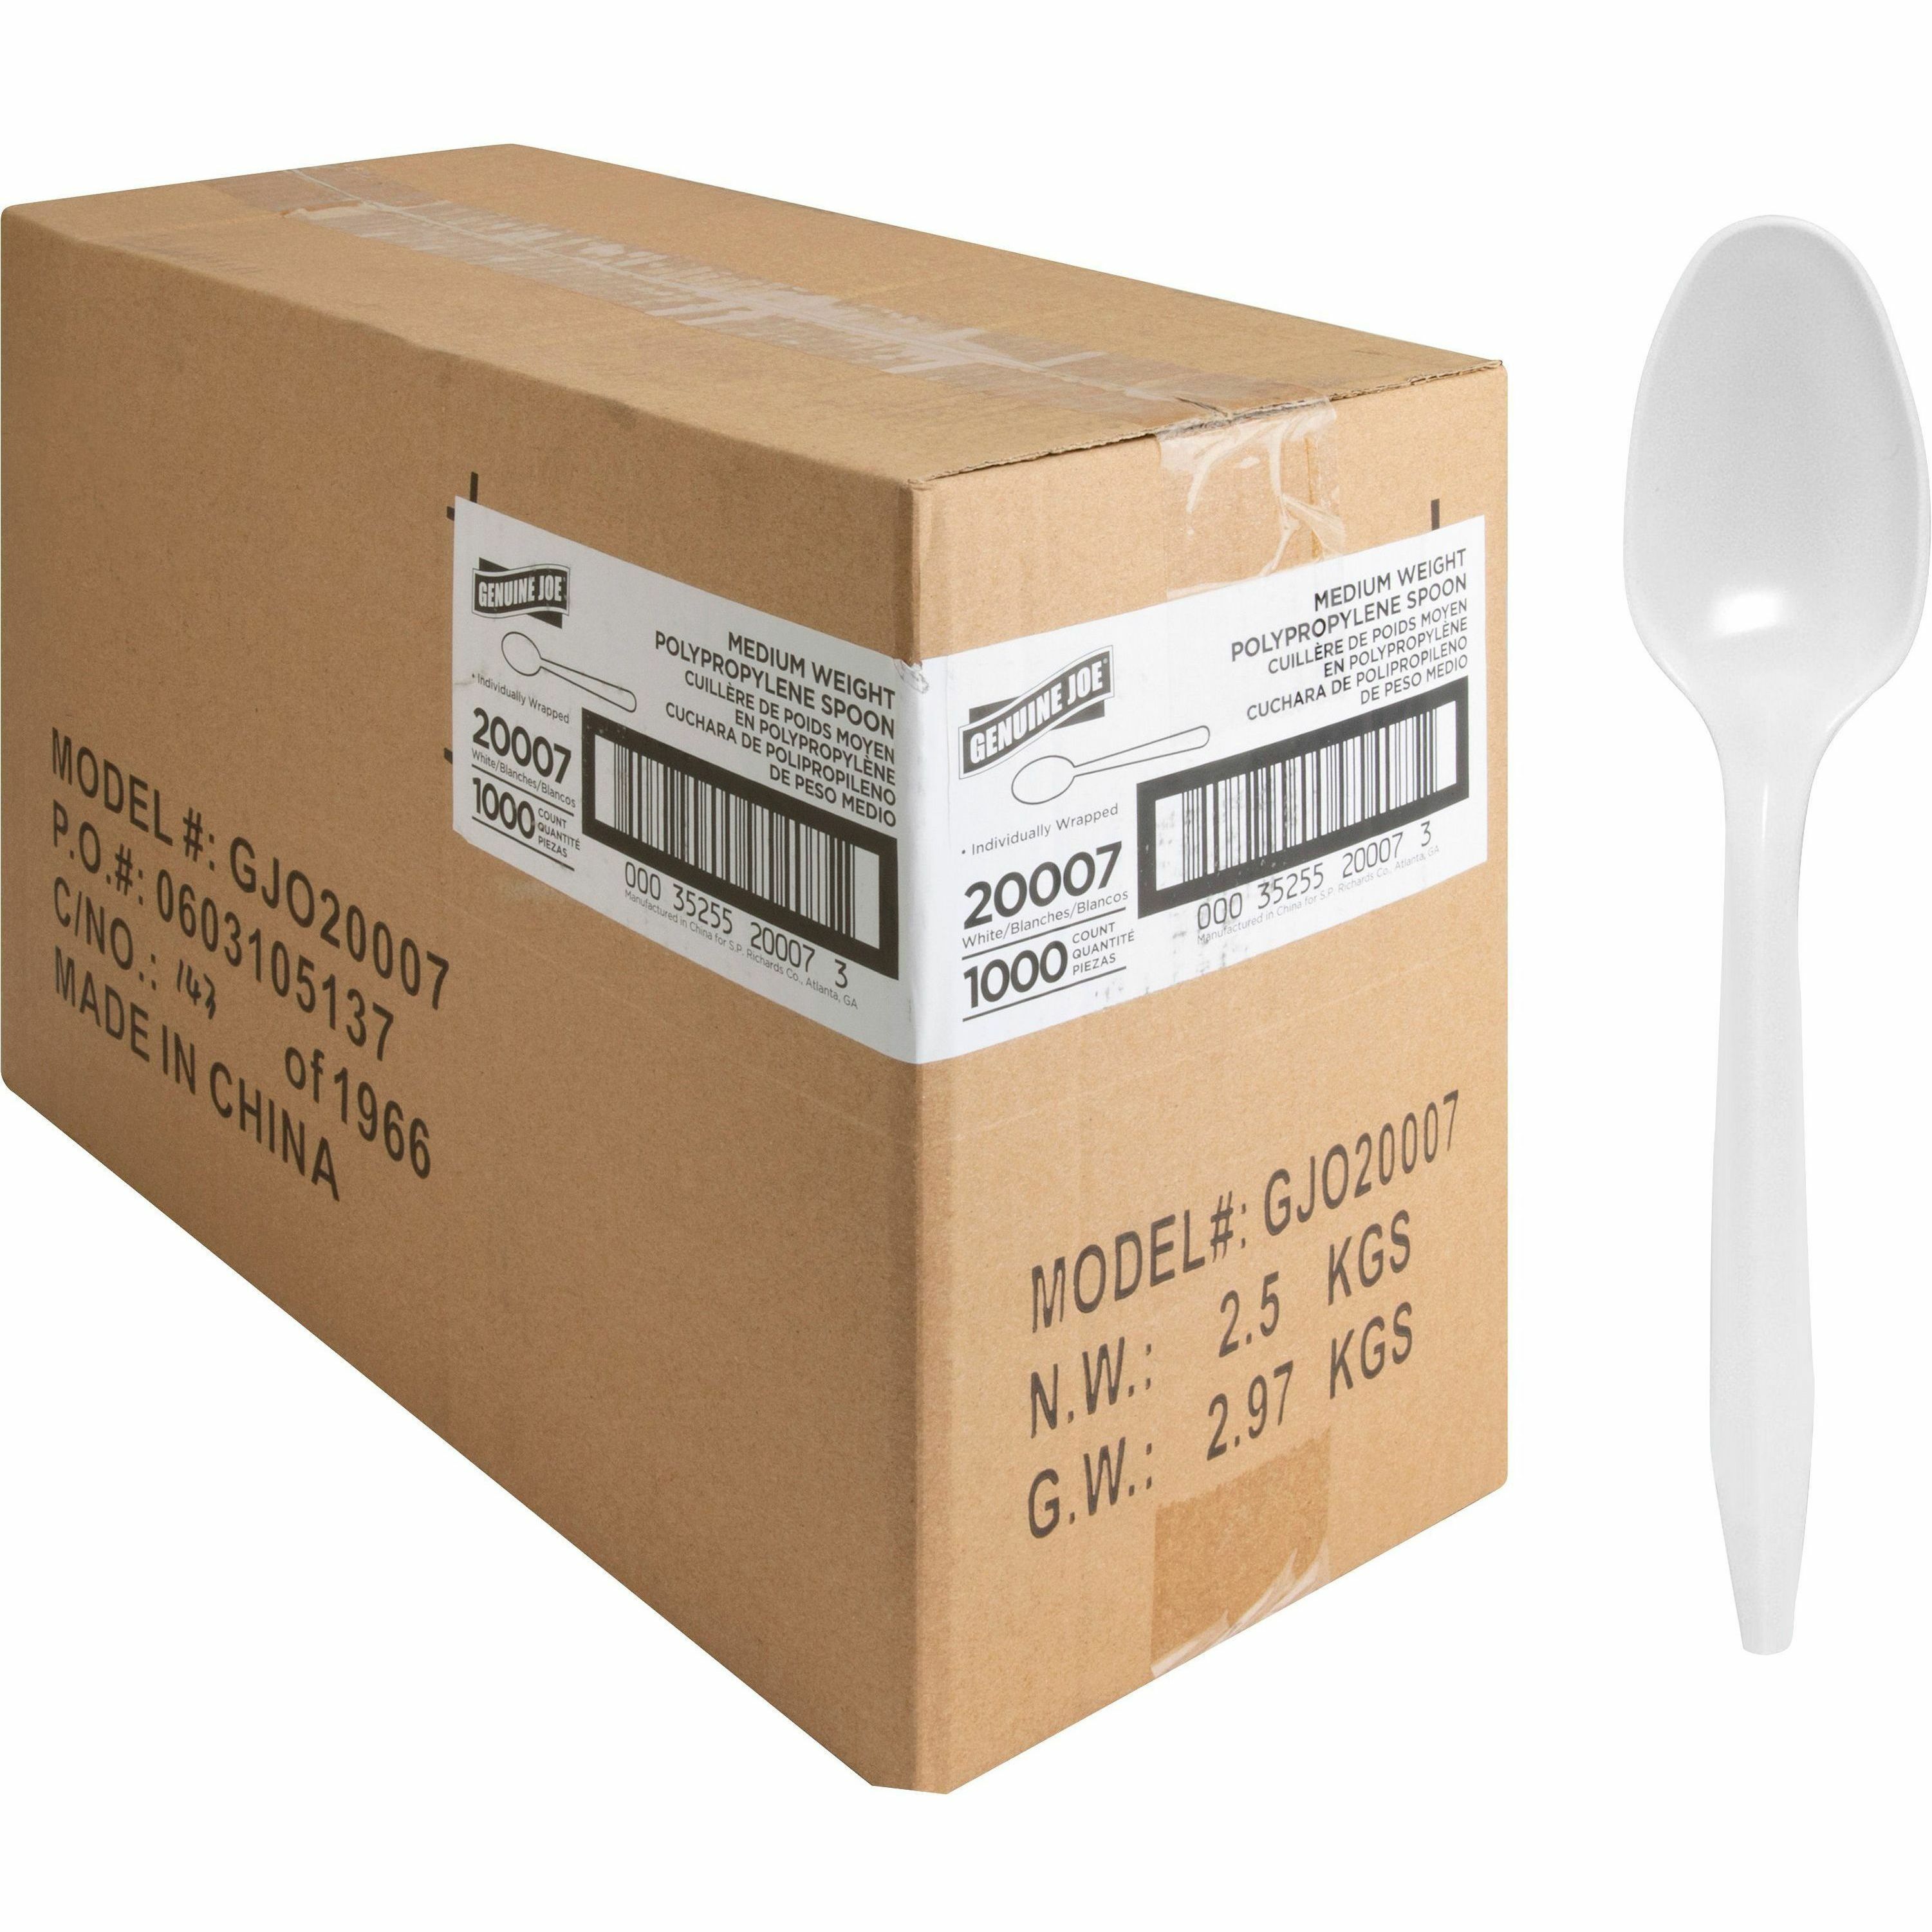 Palette Knife WholeSale - Price List, Bulk Buy at